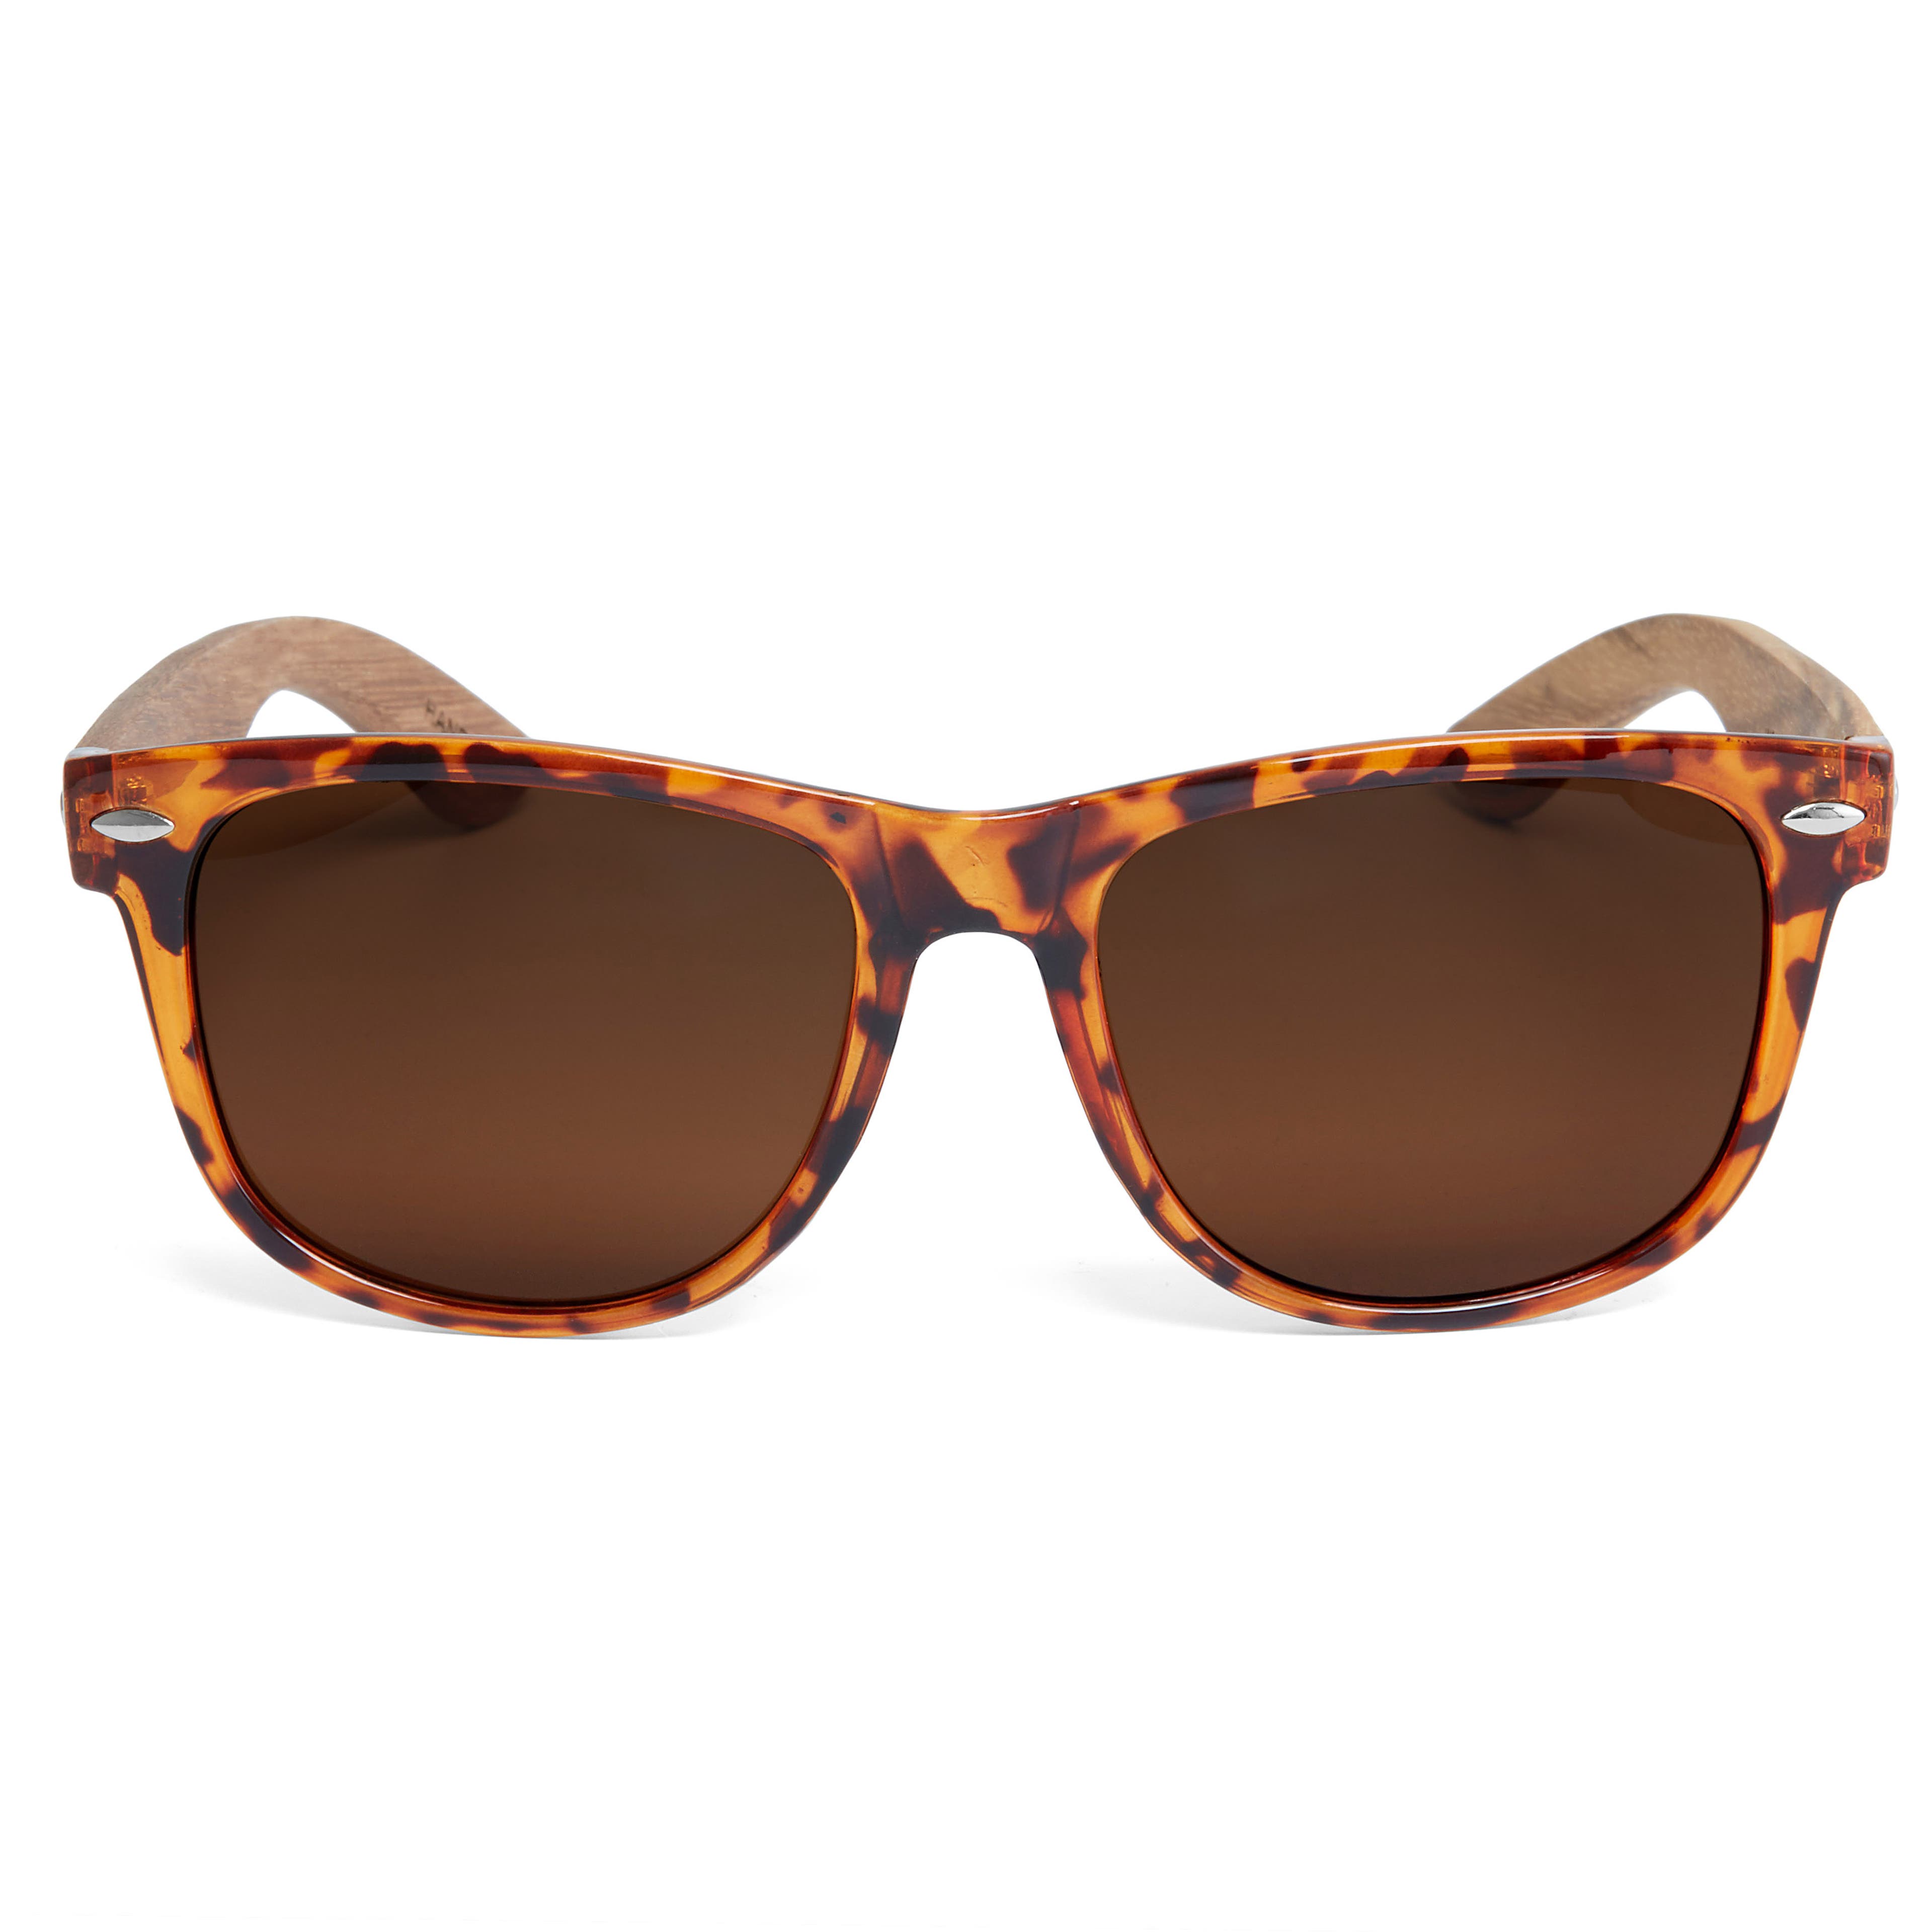 Tortoise Wood Sunglasses